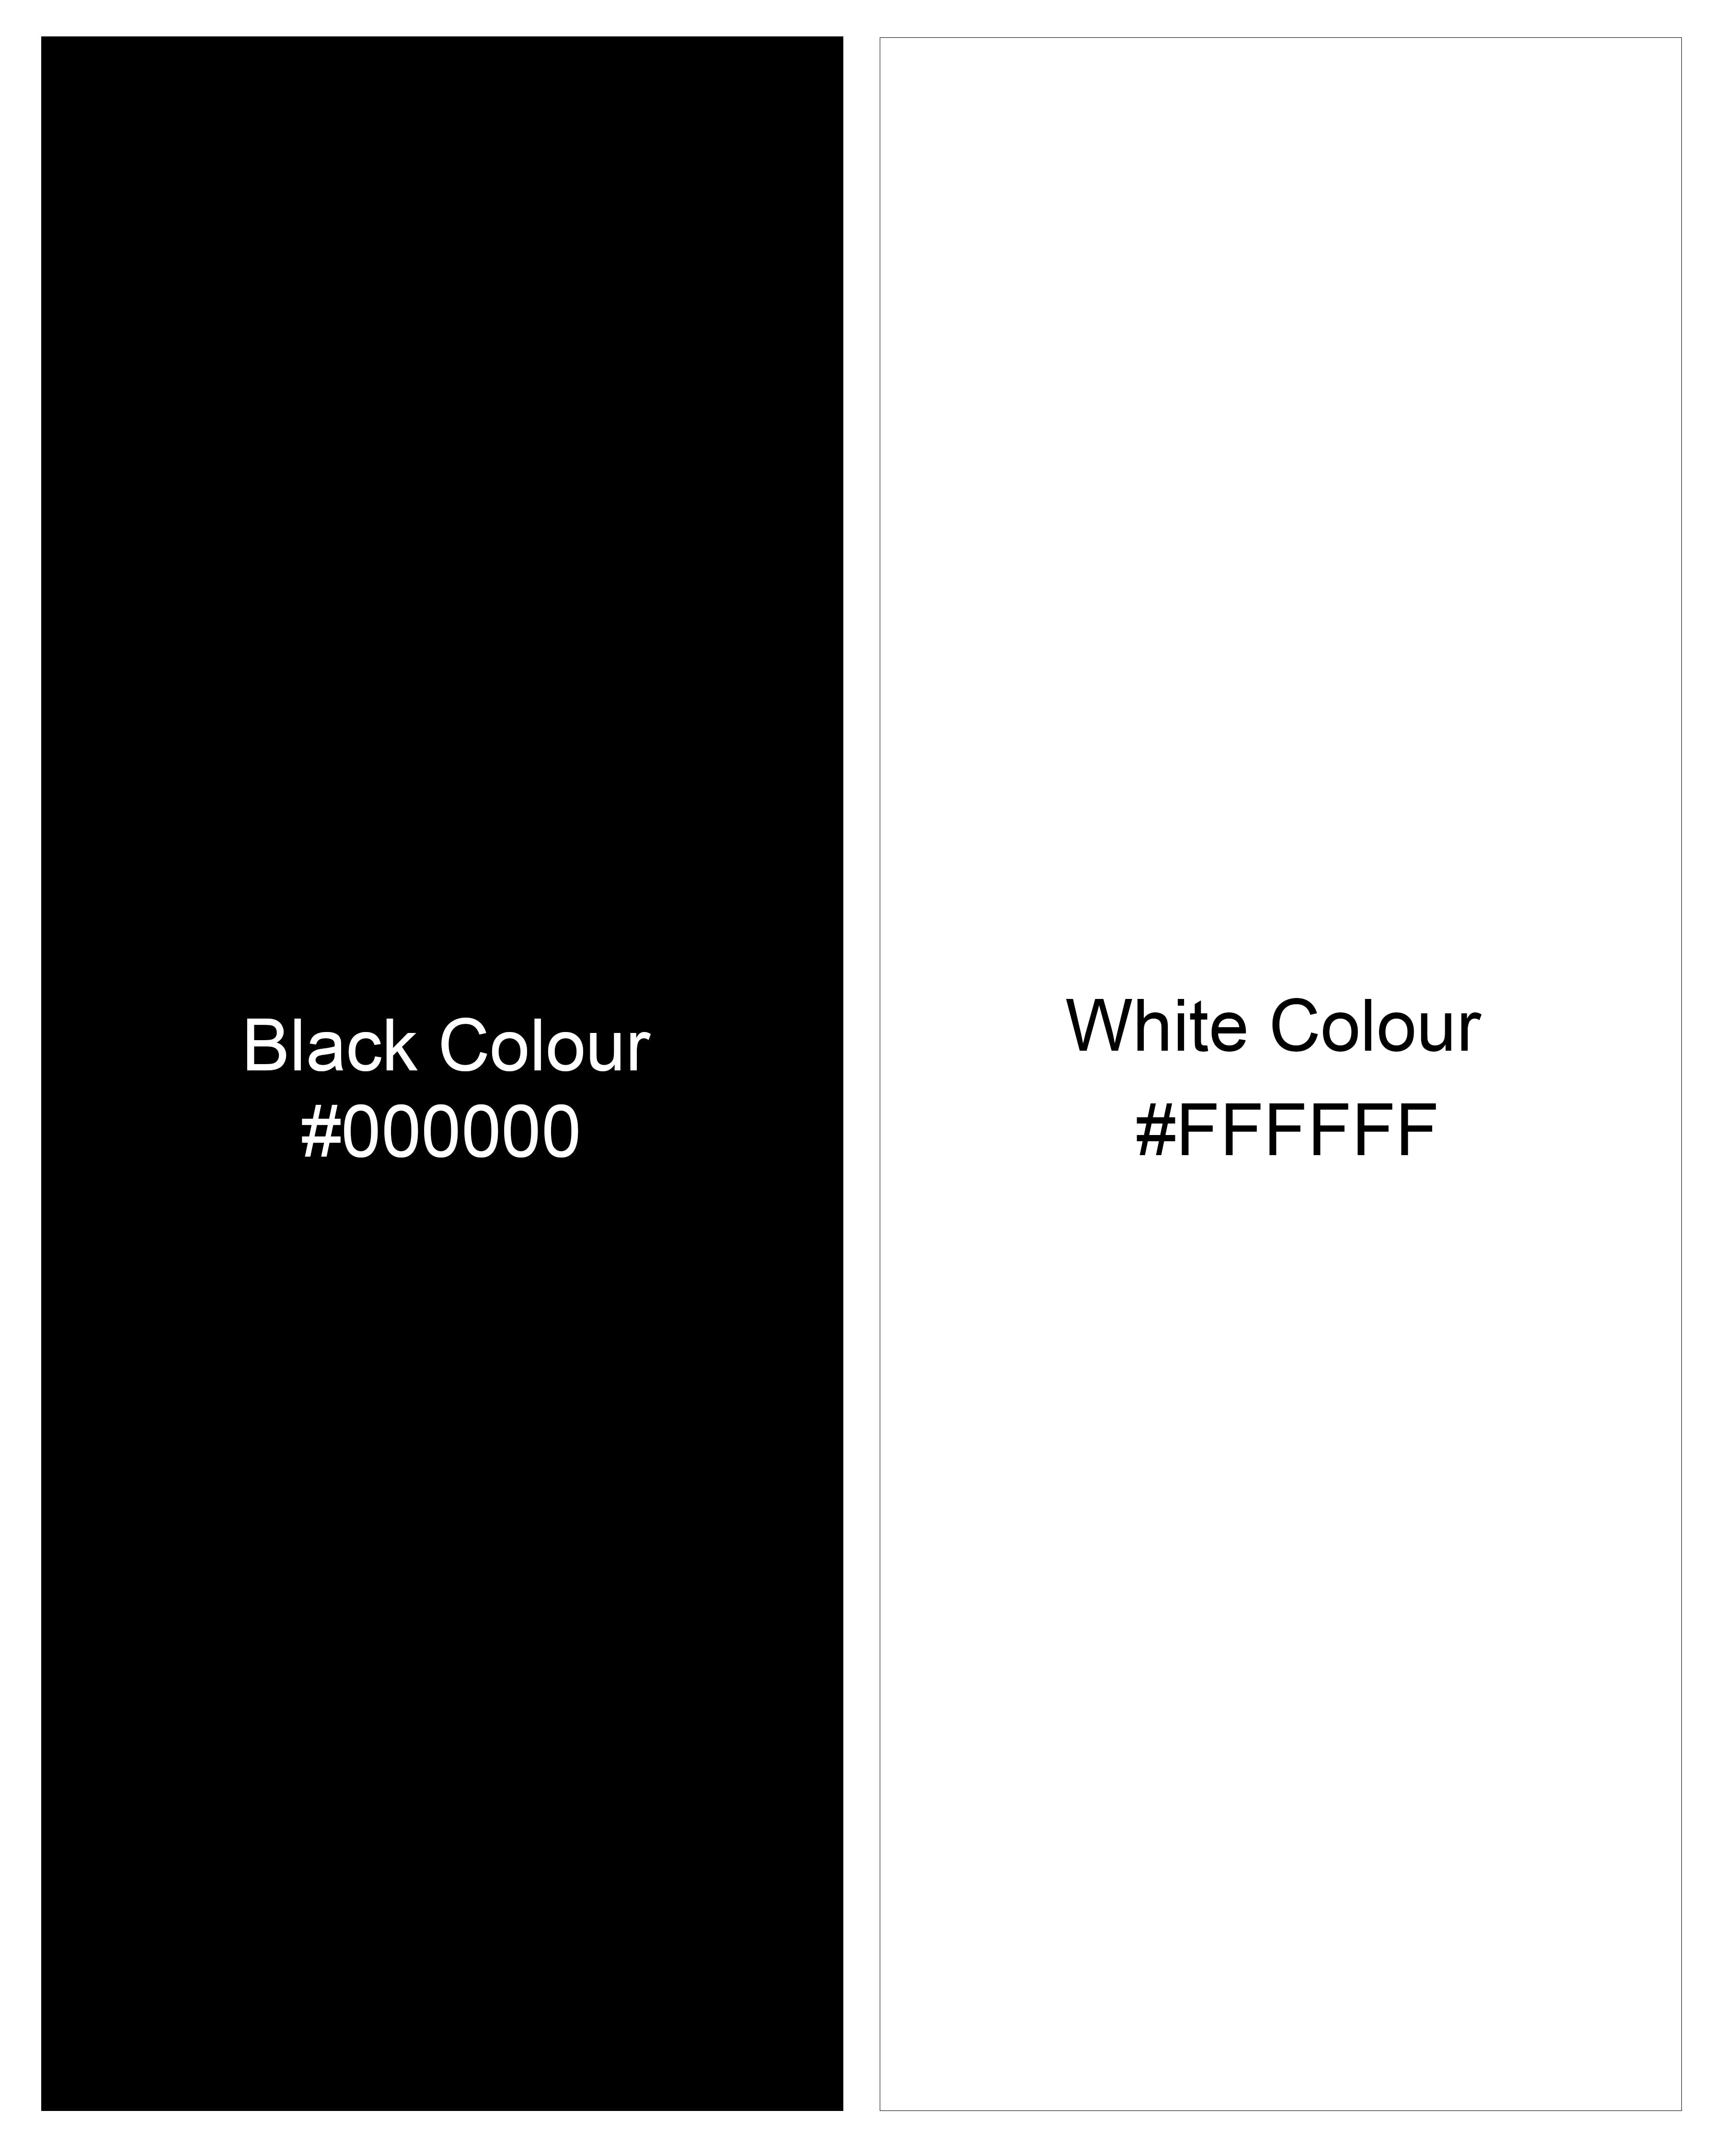 Jade Black with Spectacles Embroidered Super Soft Premium Cotton Shirt 1312-BLK-E019-38, 1312-BLK-E019-H-38, 1312-BLK-E019-39, 1312-BLK-E019-H-39, 1312-BLK-E019-40, 1312-BLK-E019-H-40, 1312-BLK-E019-42, 1312-BLK-E019-H-42, 1312-BLK-E019-44, 1312-BLK-E019-H-44, 1312-BLK-E019-46, 1312-BLK-E019-H-46, 1312-BLK-E019-48, 1312-BLK-E019-H-48, 1312-BLK-E019-50, 1312-BLK-E019-H-50, 1312-BLK-E019-52, 1312-BLK-E019-H-52